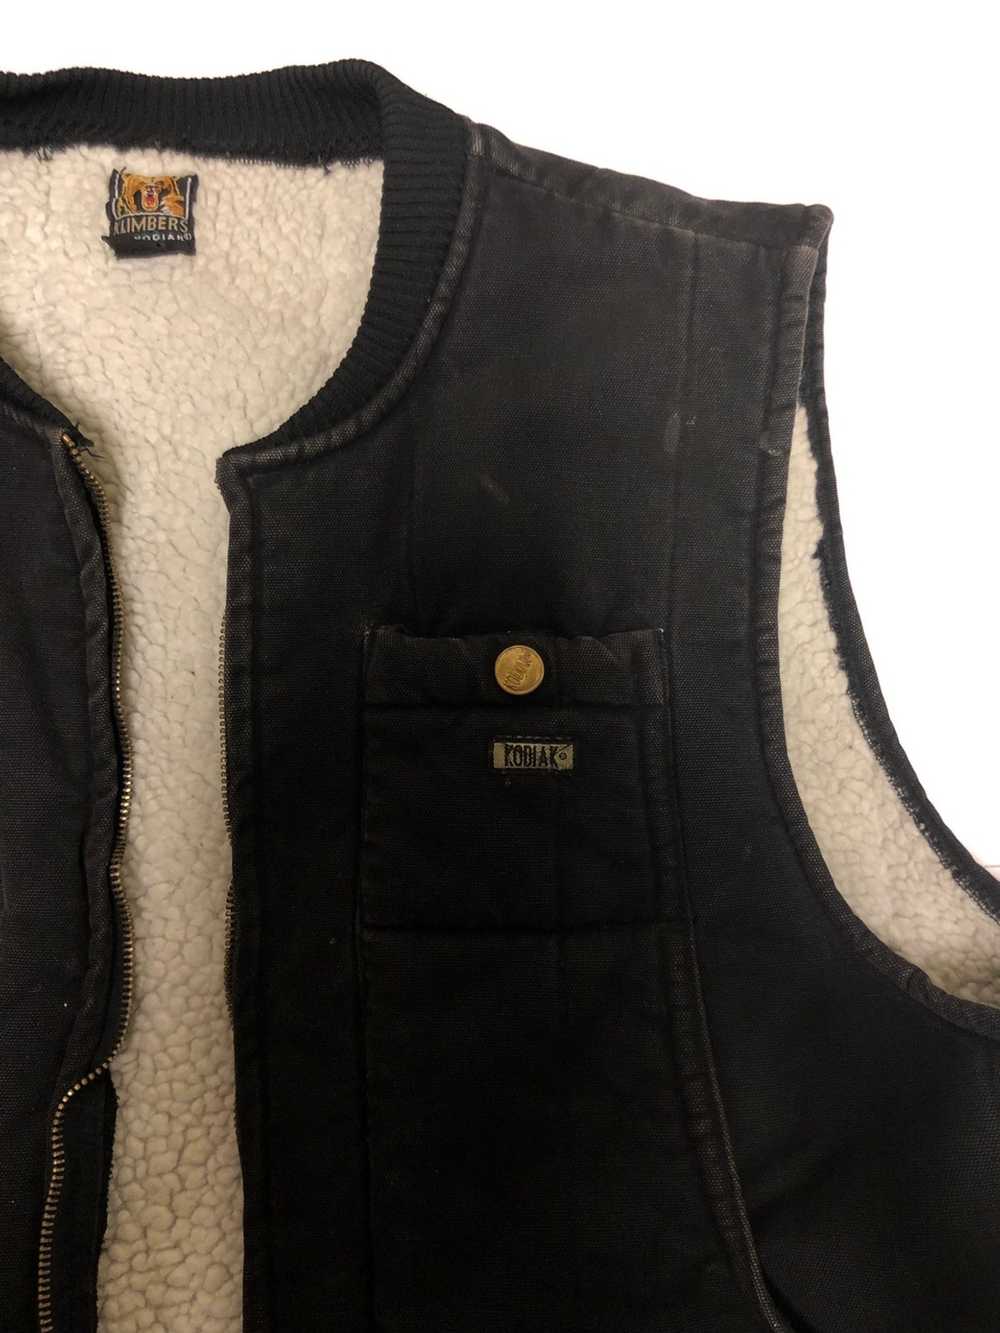 Other Washed out Black Kodiak Insulated Vest - image 2